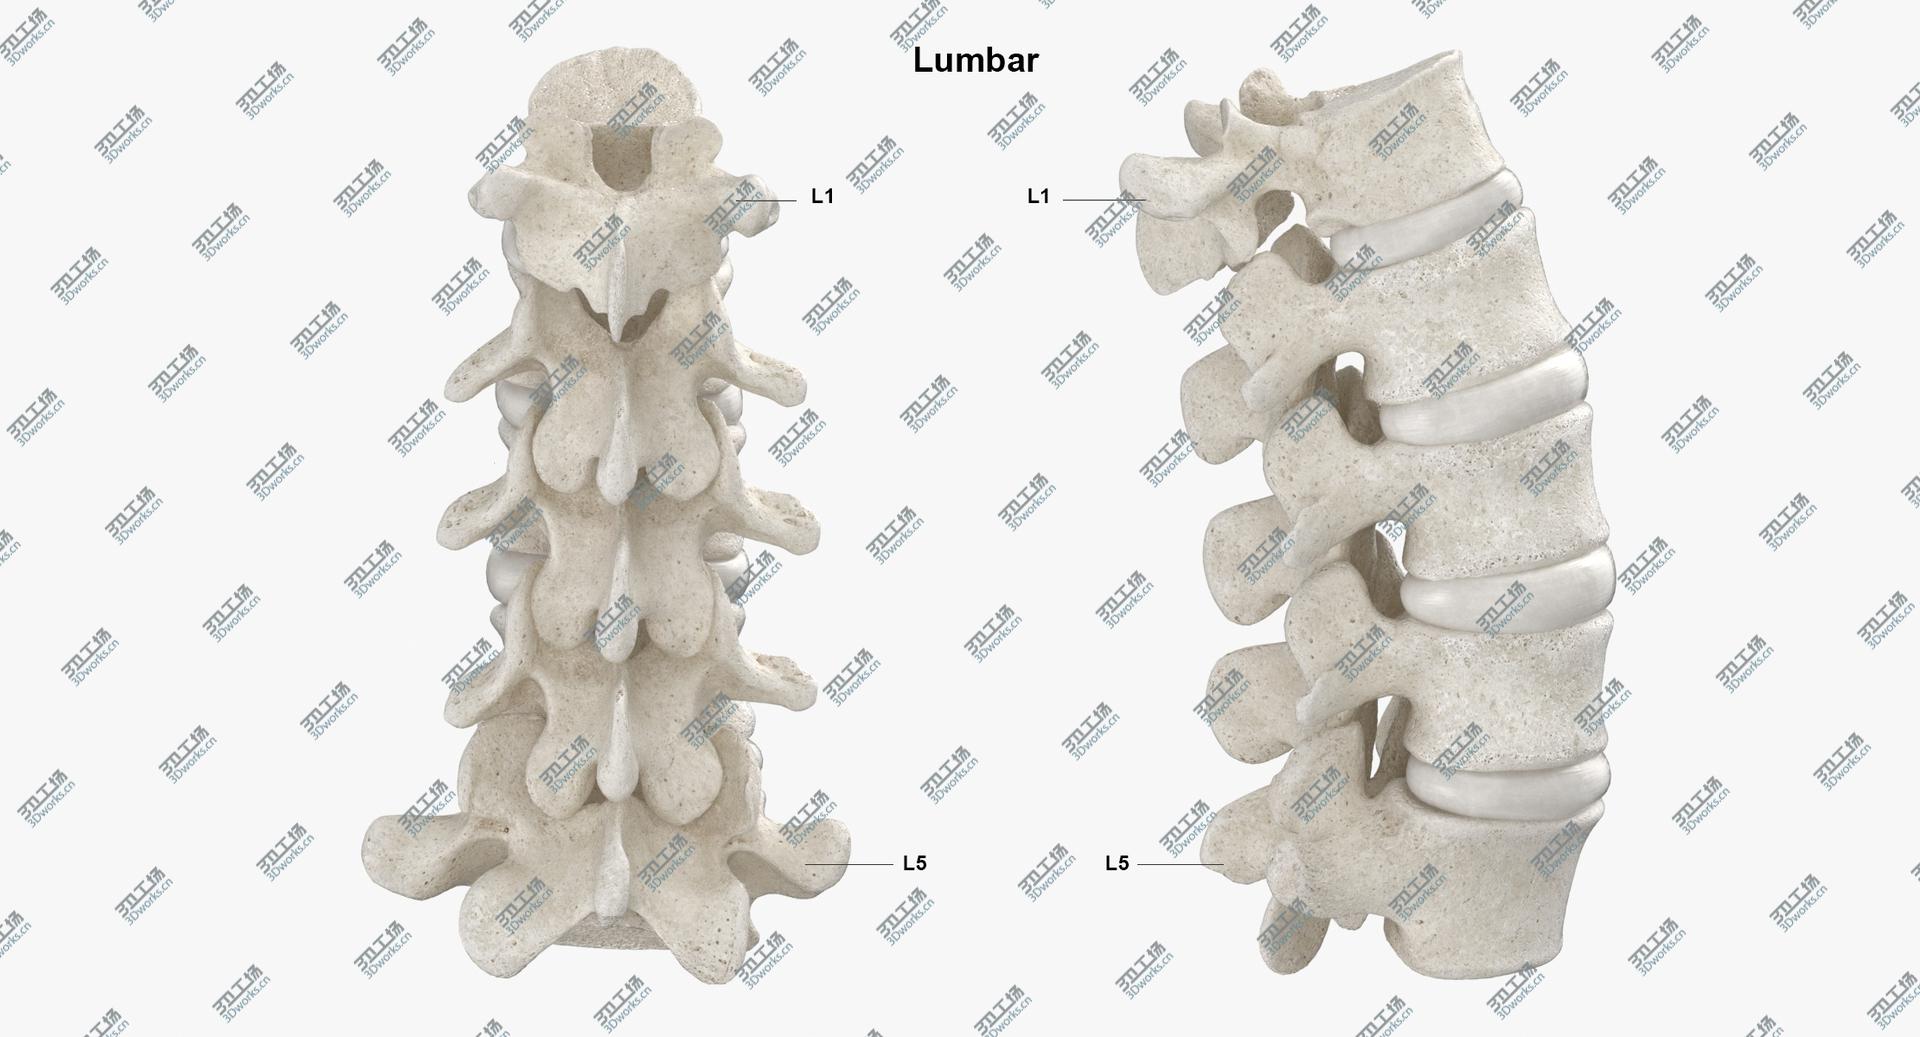 images/goods_img/2021040163/Real Human Lumbar Vertebrae L1 to L5 Bones With Intervertibral Disks 01 White 3D model/4.jpg